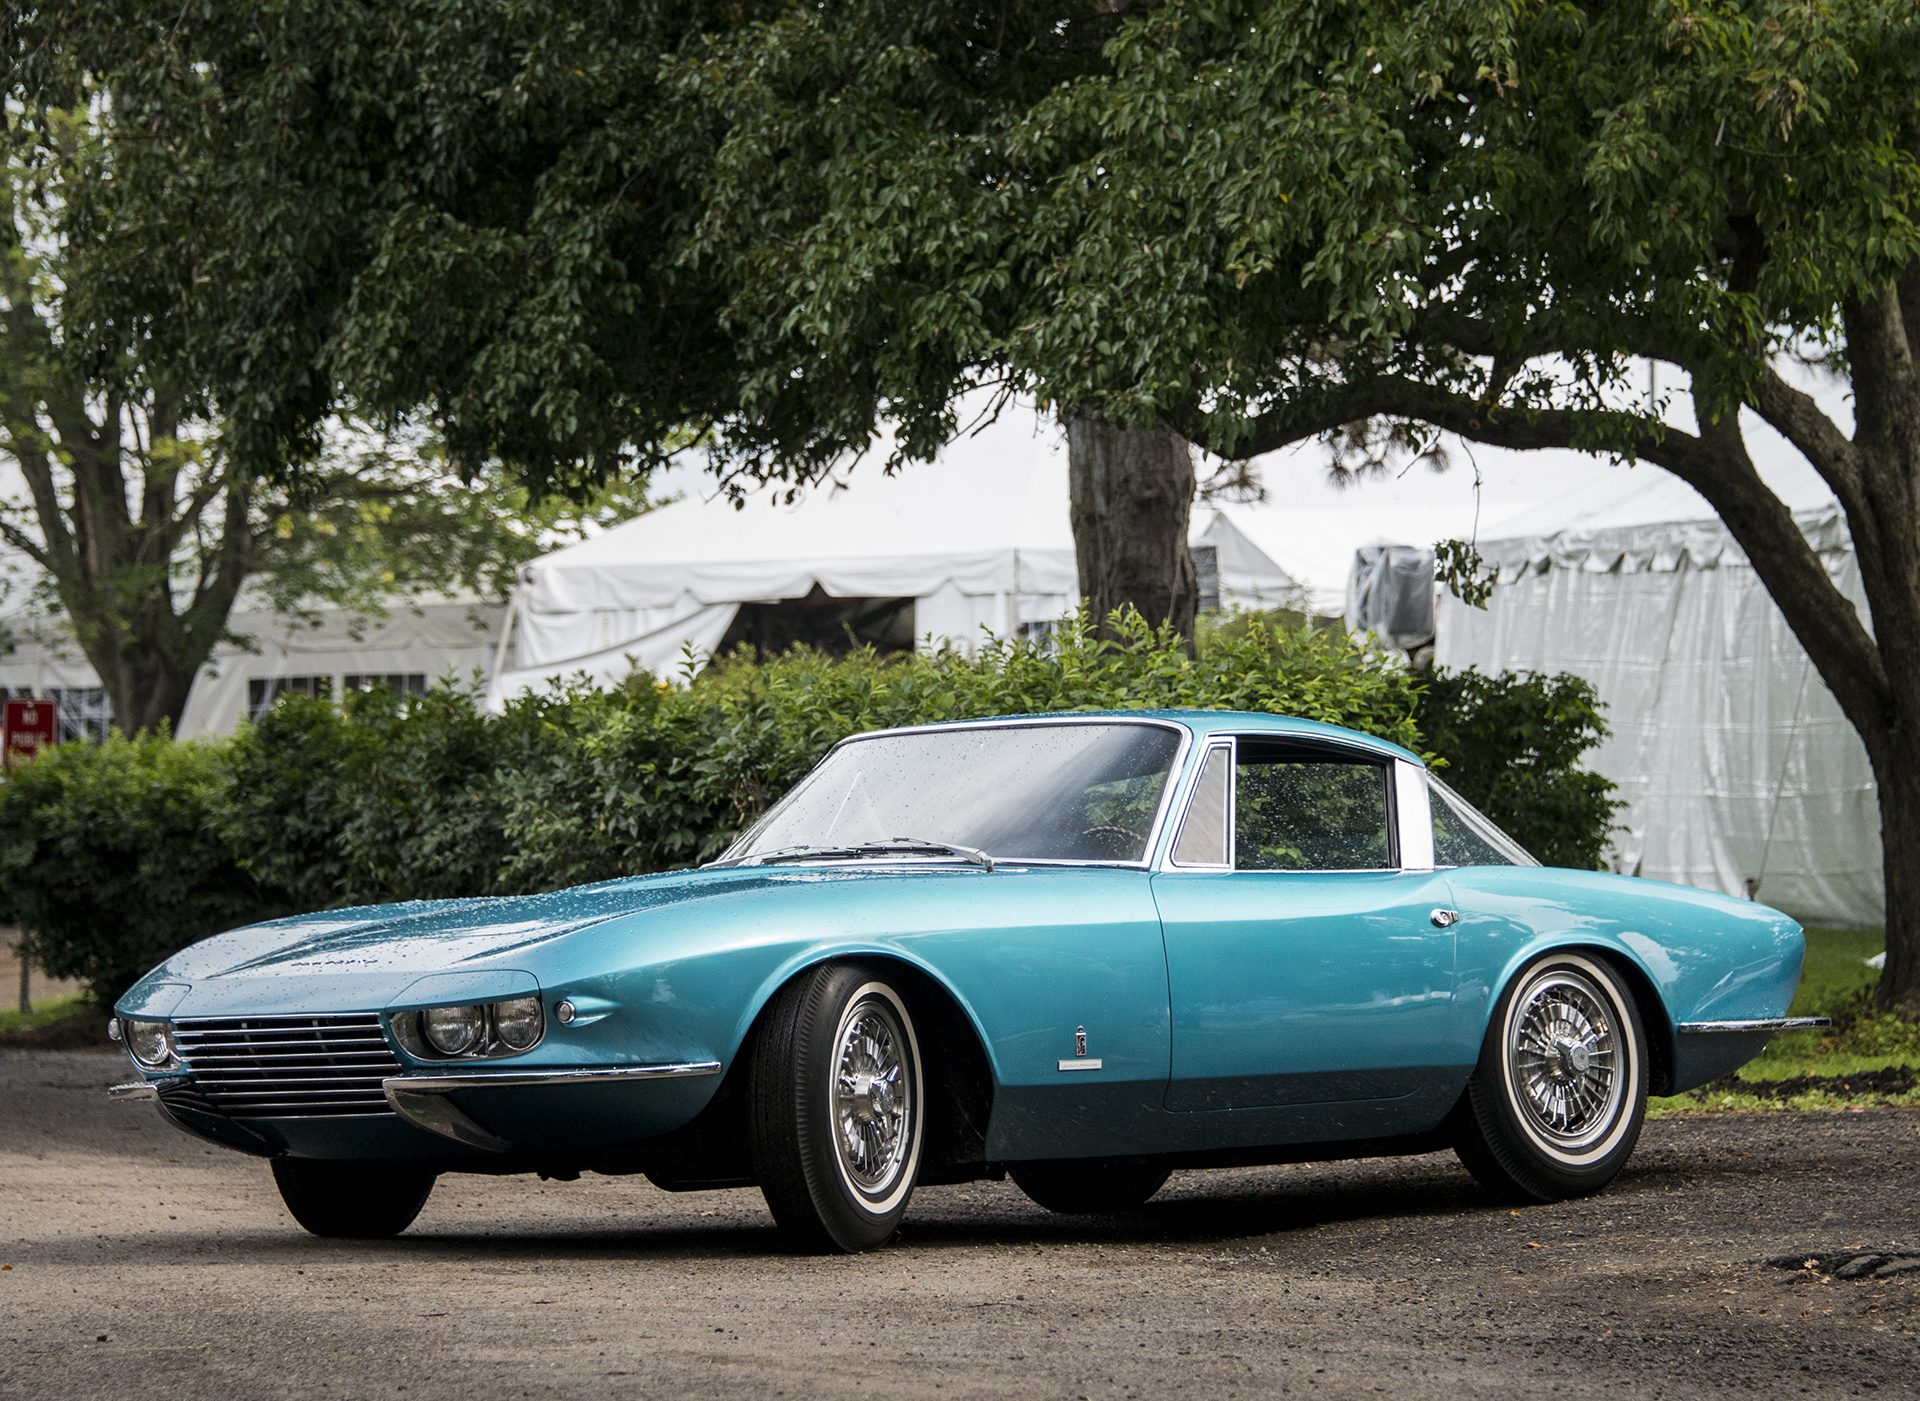 Corvette Of The Day: 1963 Corvette Rondine